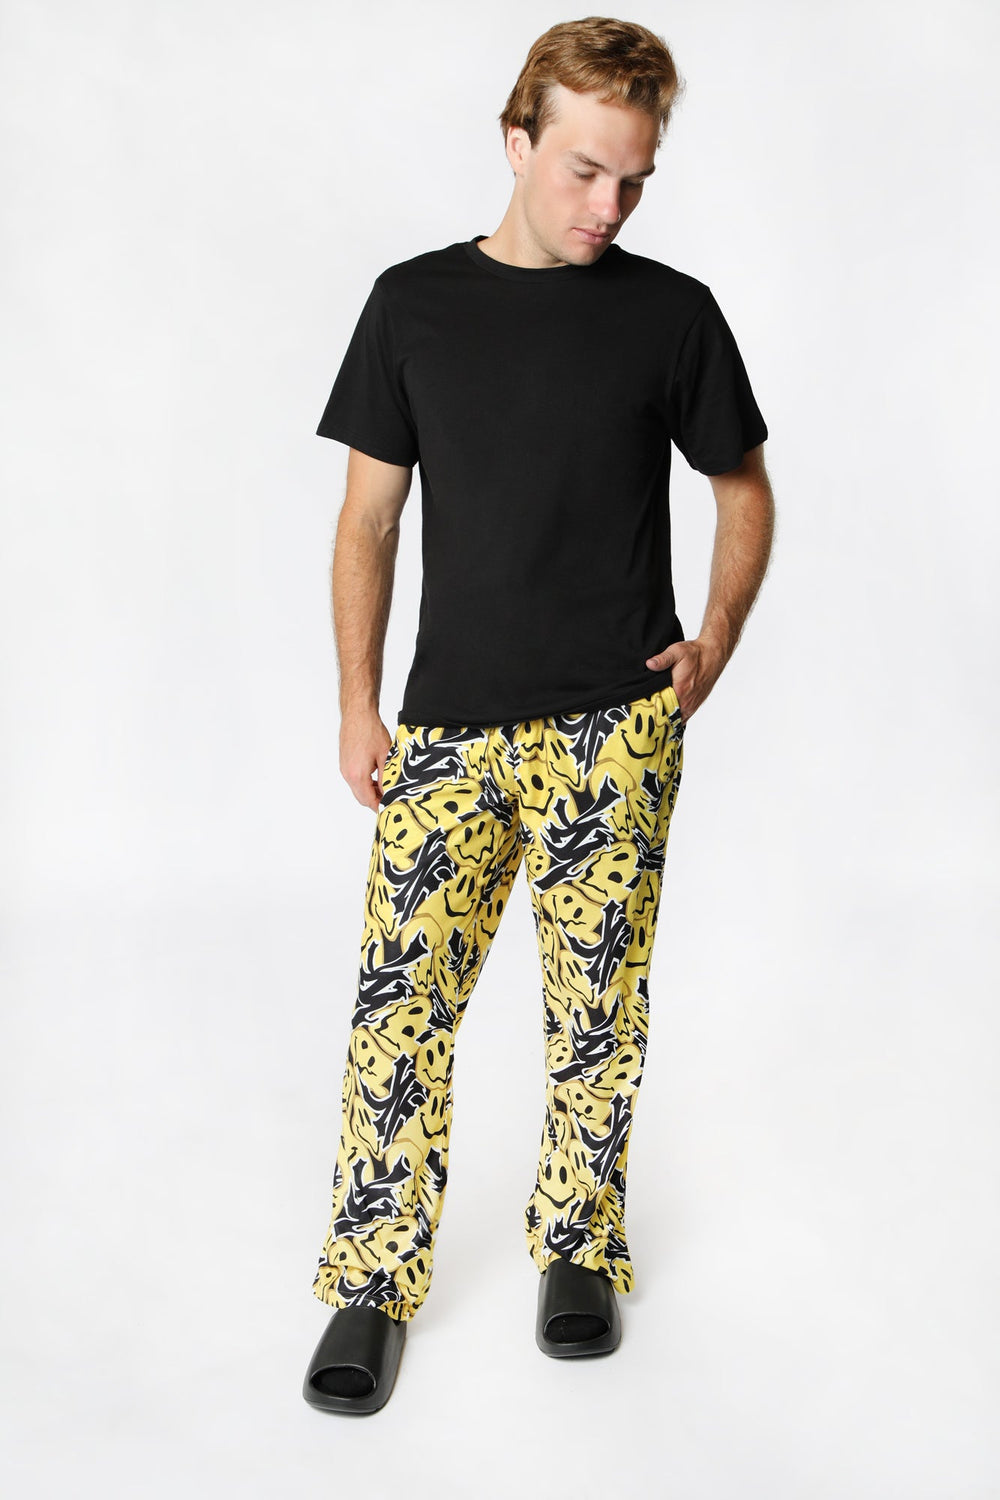 Bas de Pyjama Imprimé Smiley Zoo York Homme Jaune